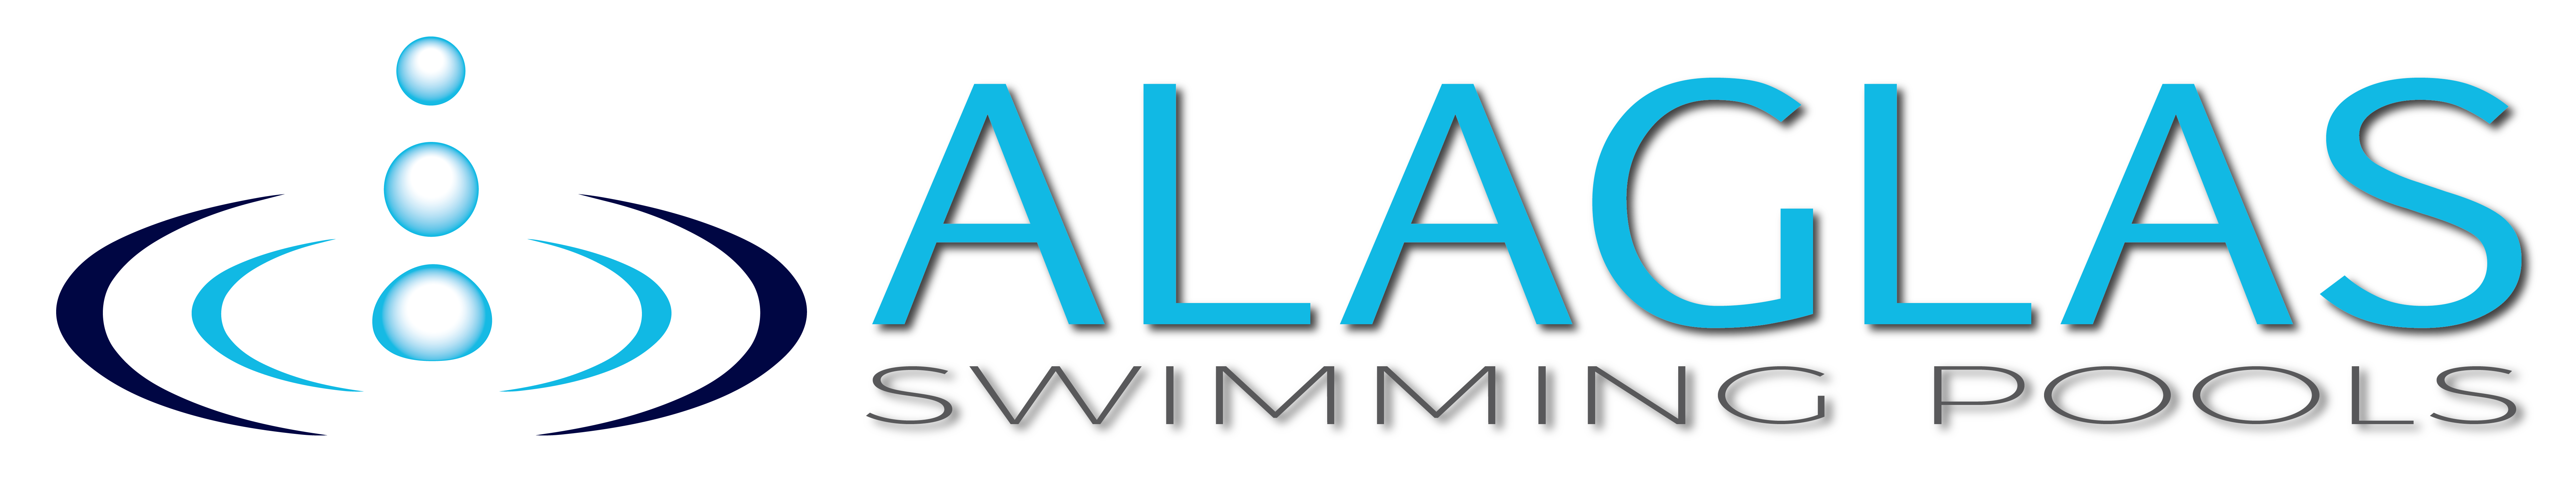 Alaglas fiberglass pool logo